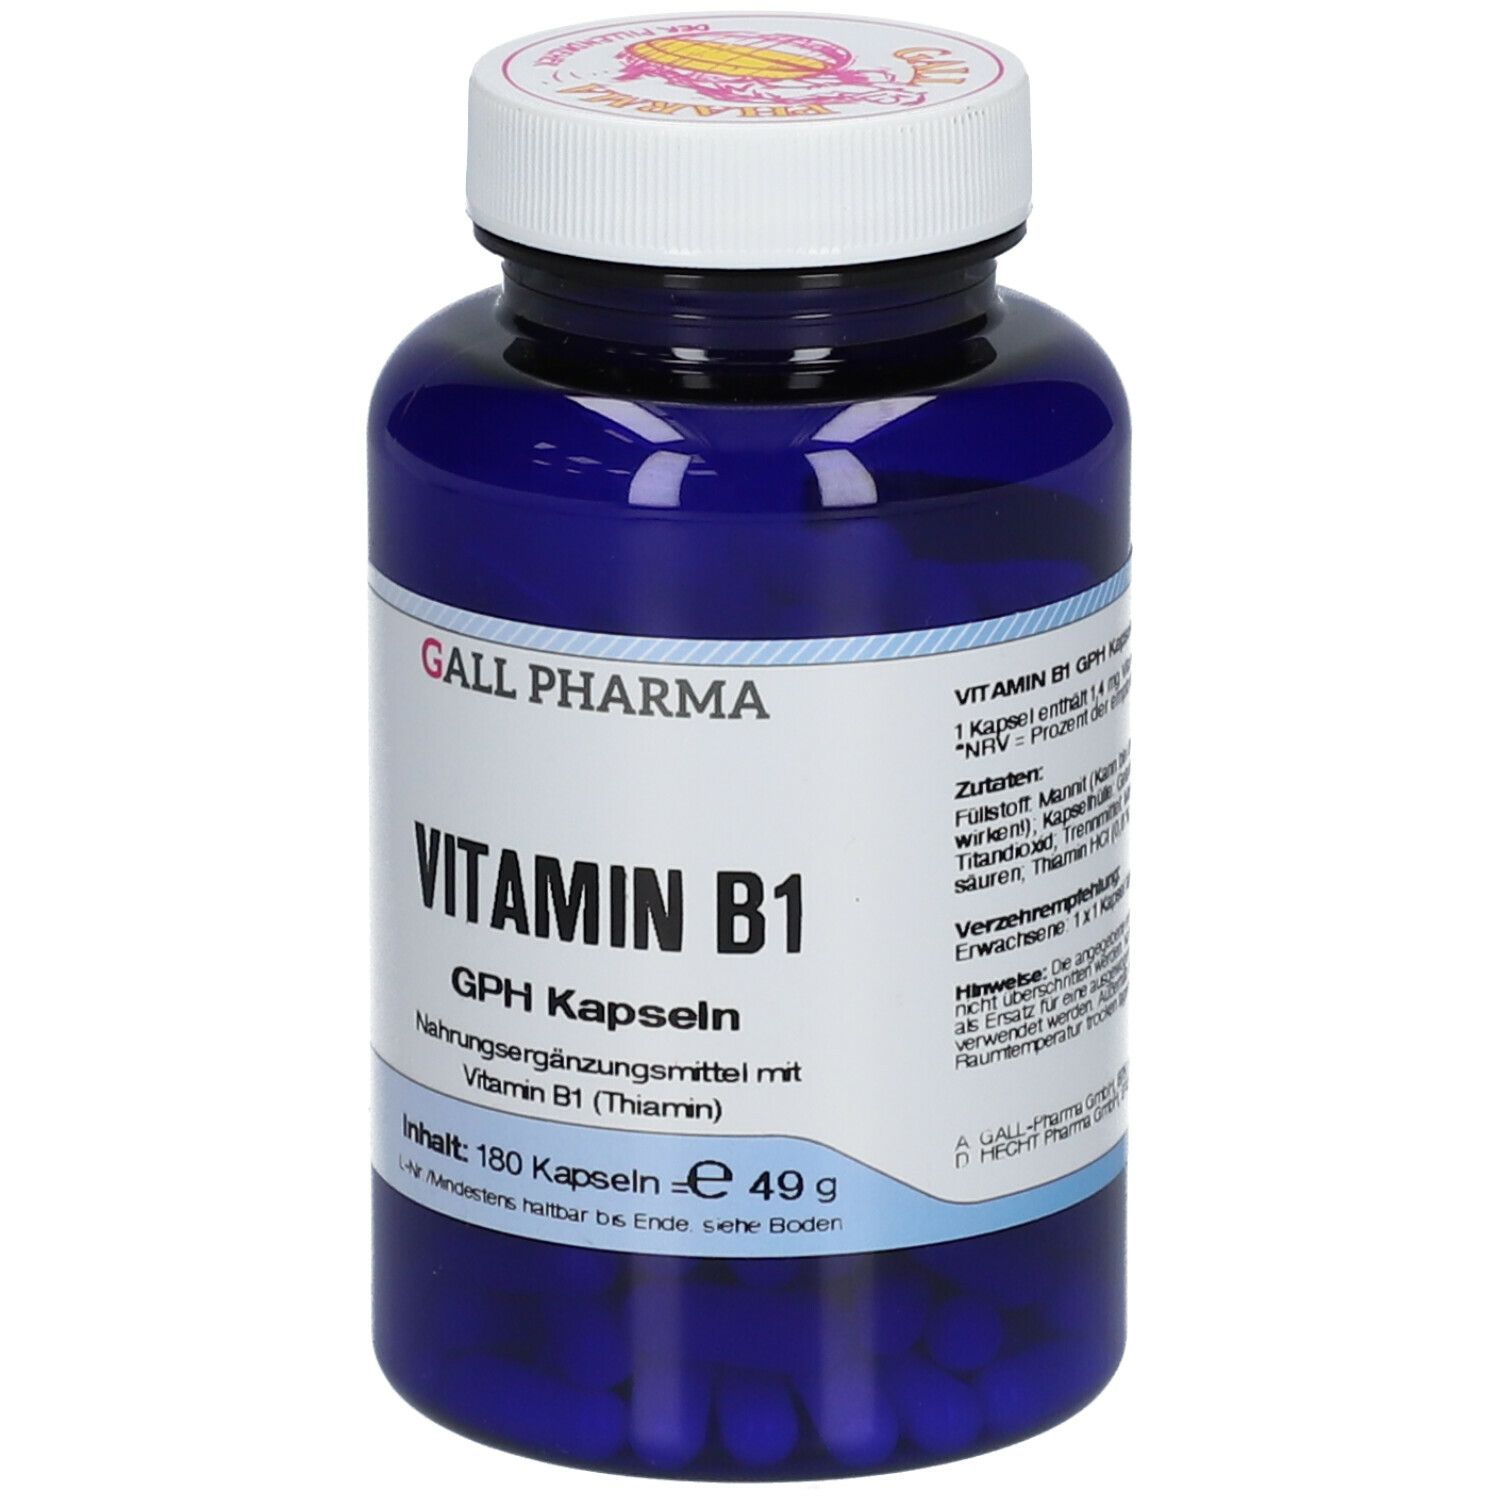 GALL PHARMA Vitamin B1 1,4 mg